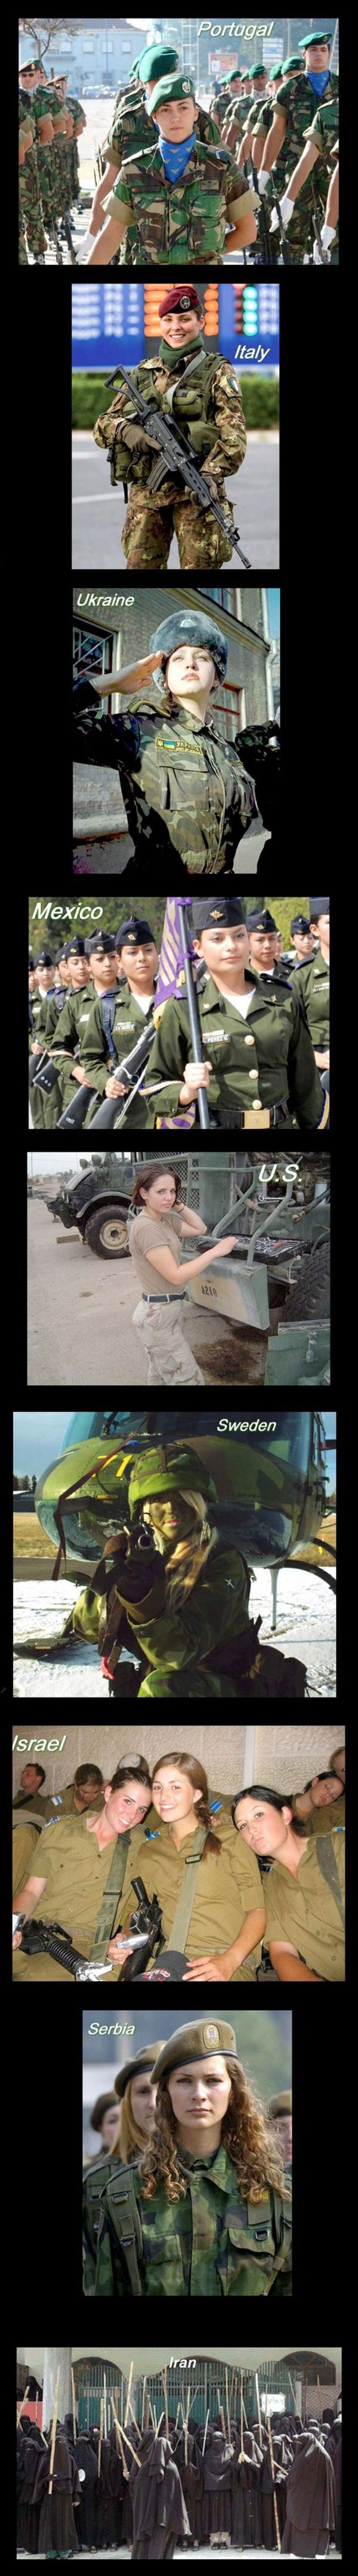 Army Women Around The World